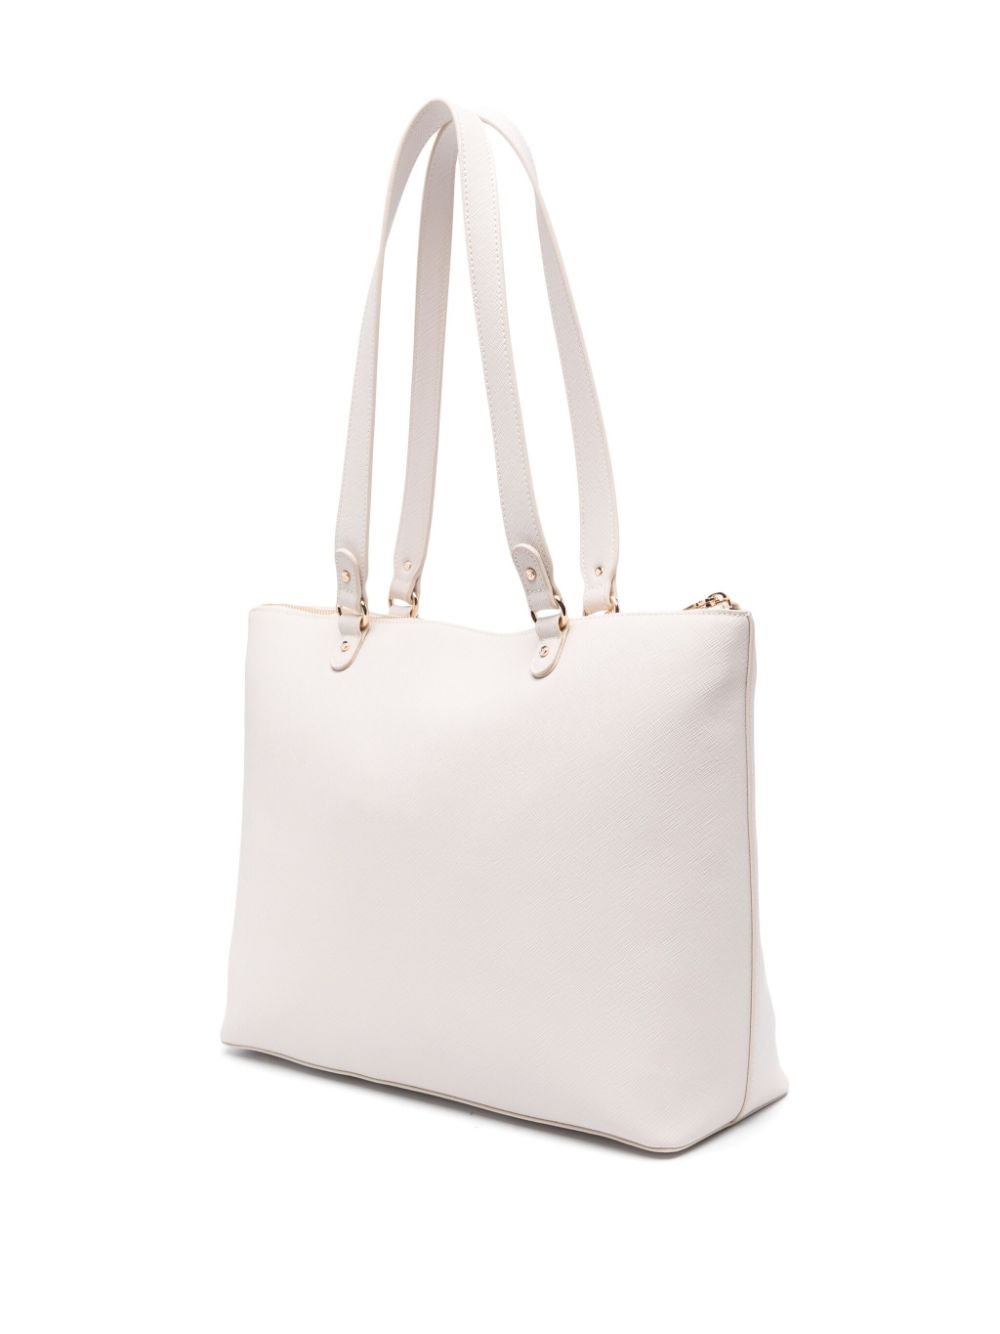 LIU JO pouch-embellished tote bag - Beige